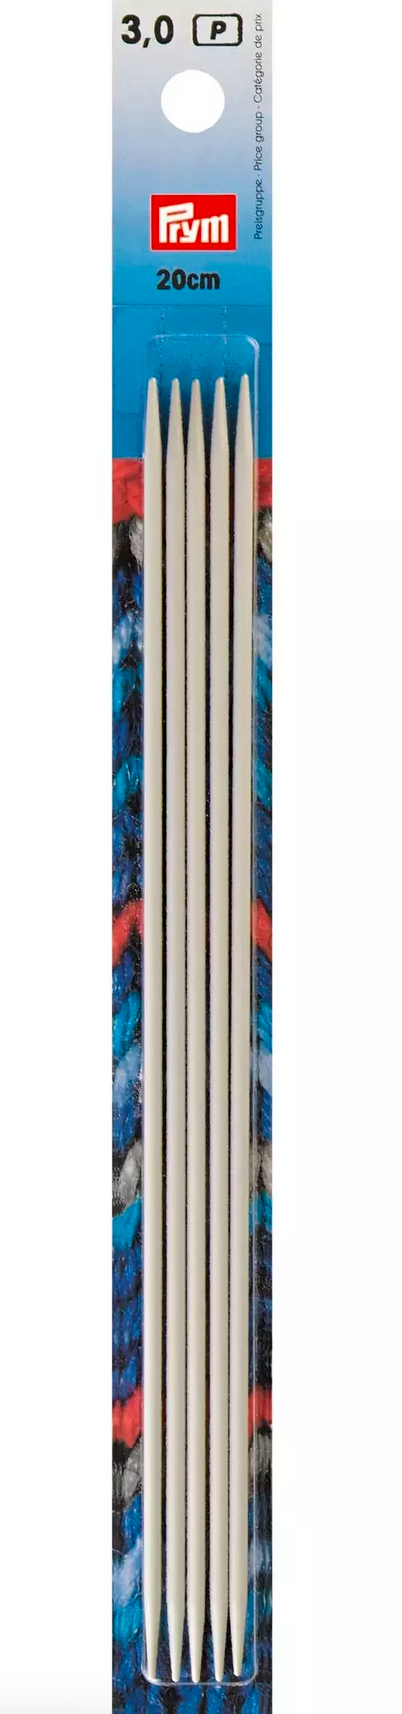 Prym Strumpfstricknadeln Alu 3,00mm 20cm